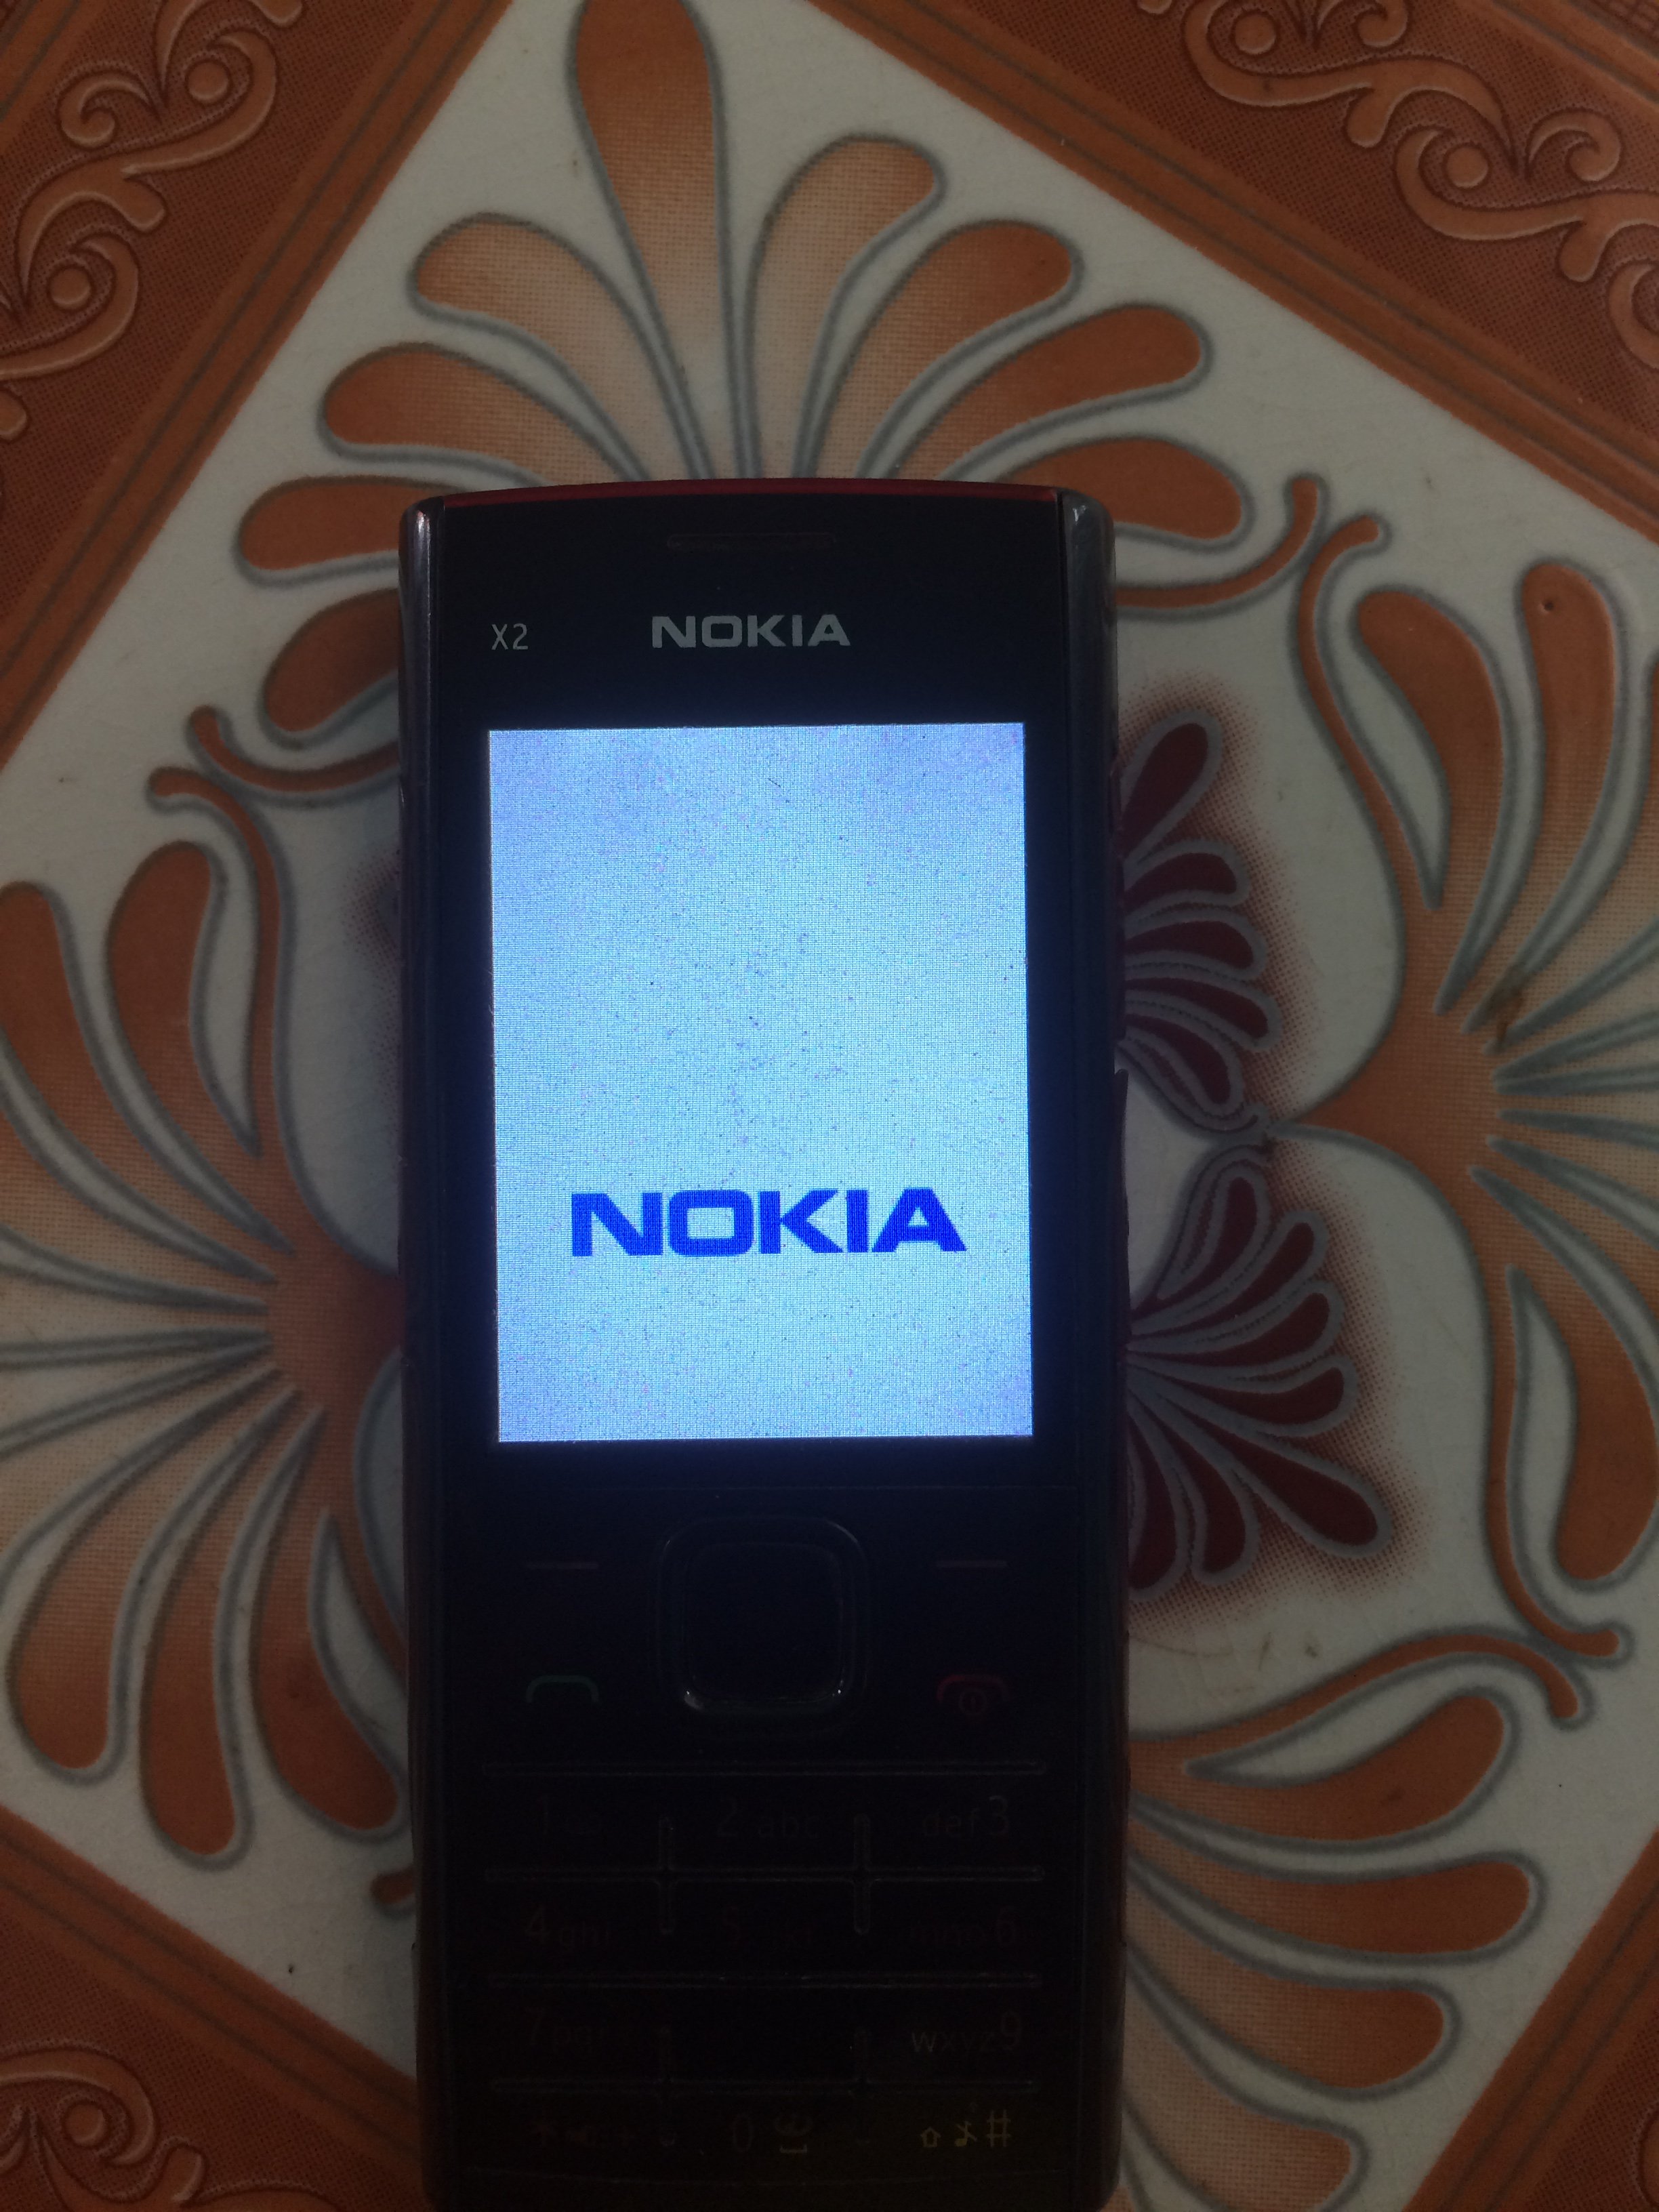 Nokia X2-00 bị treo logo